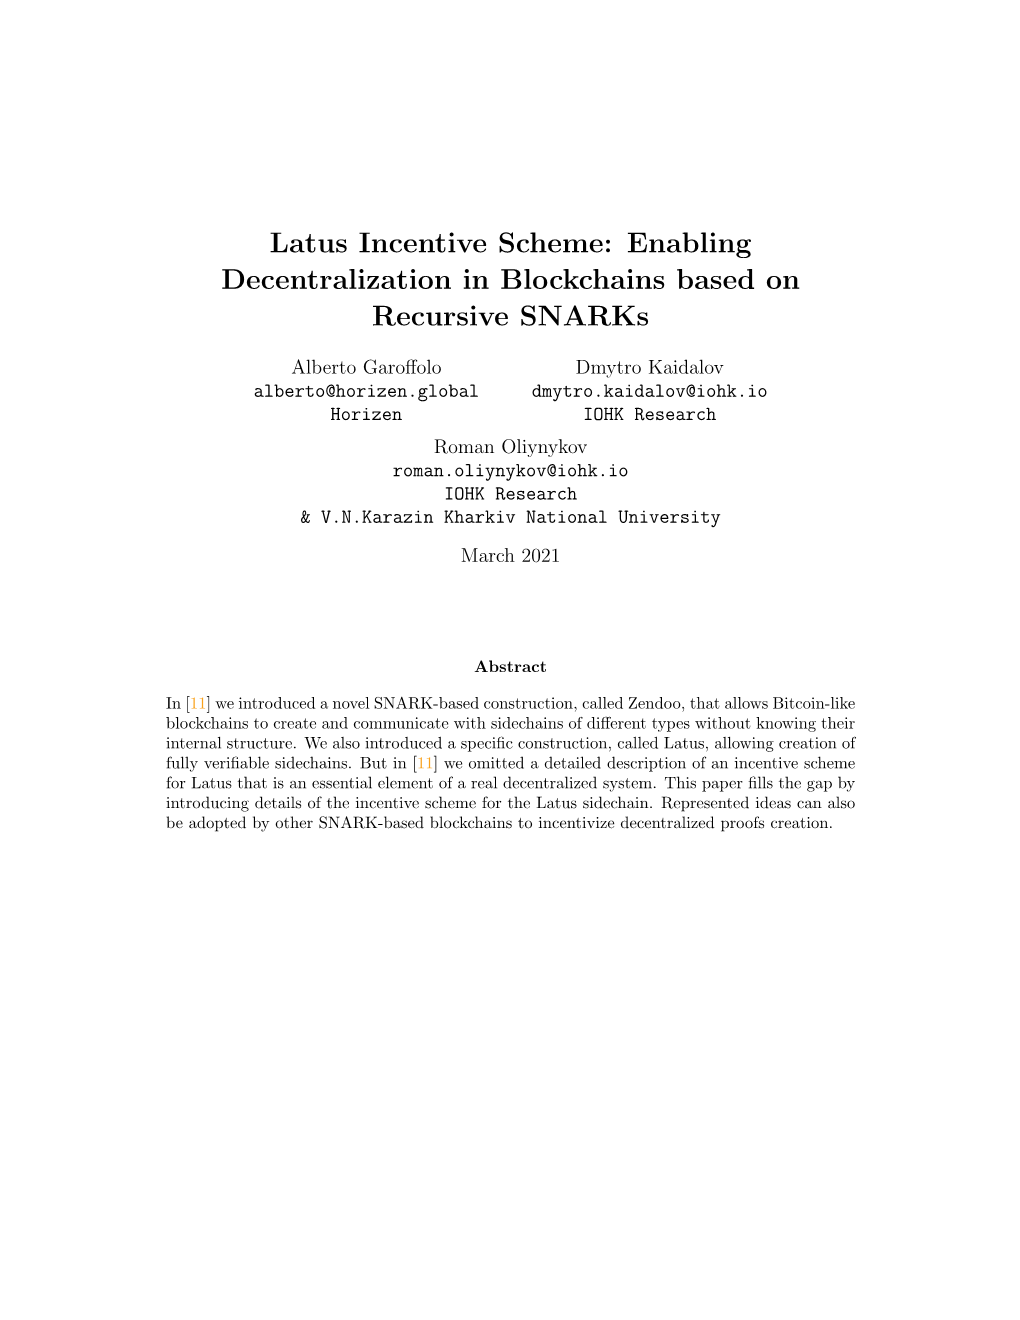 Latus Incentive Scheme: Enabling Decentralization in Blockchains Based on Recursive Snarks